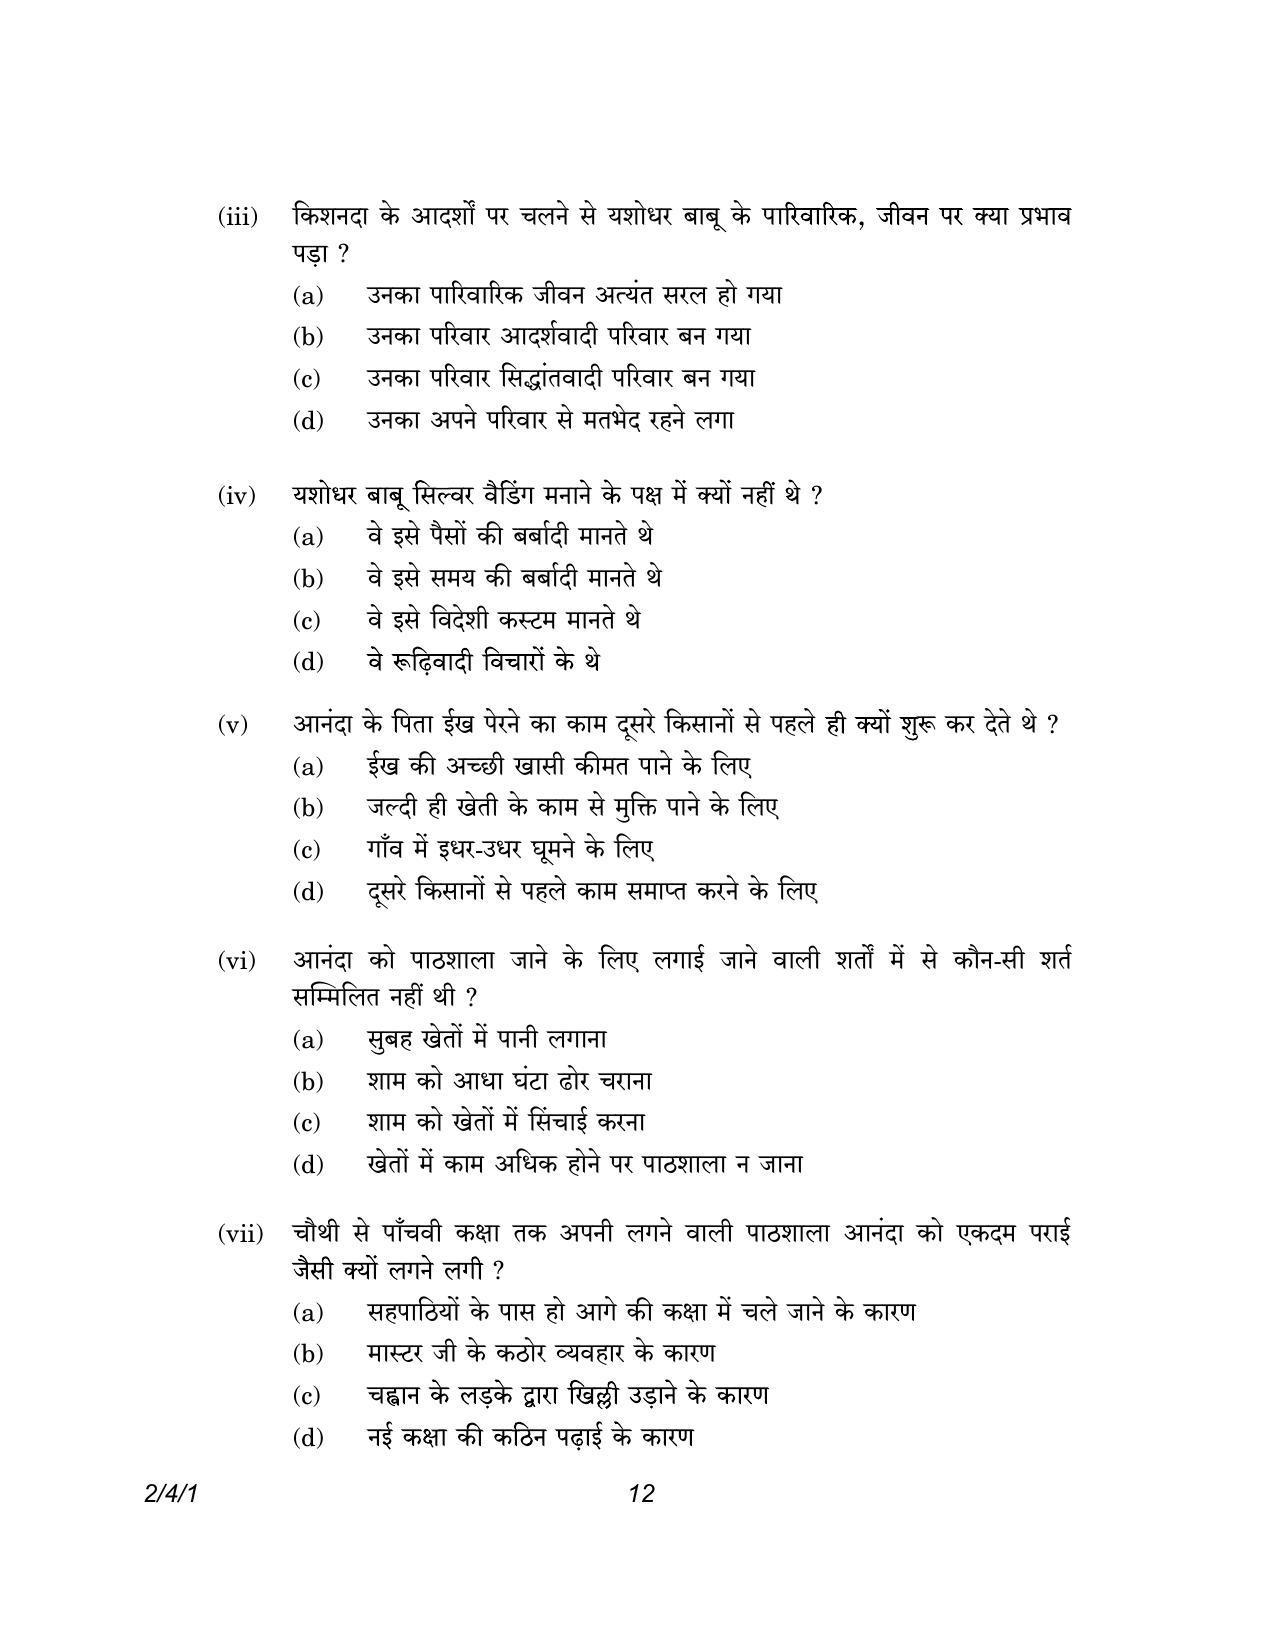 CBSE Class 12 2-4-1 Hindi Core version 2023 Question Paper - Page 12